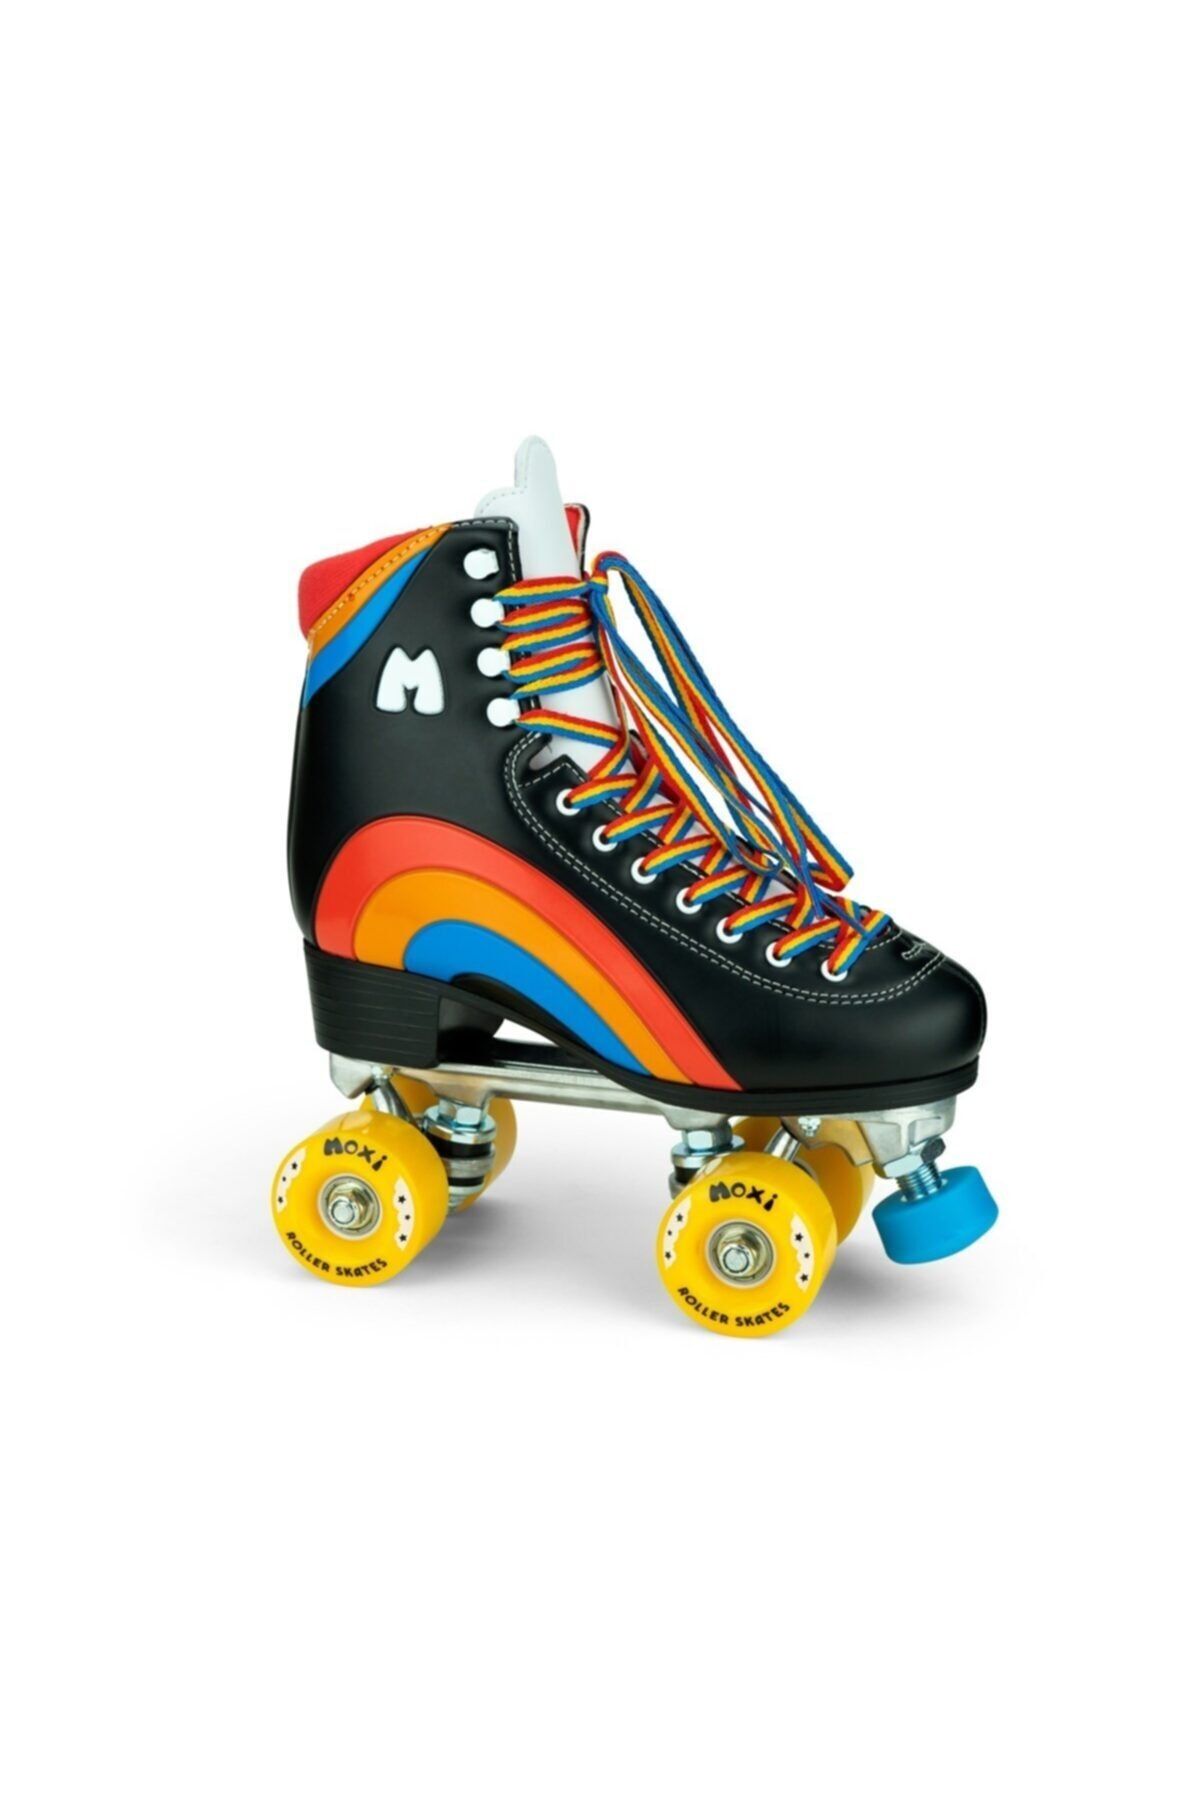 Moxi Skates Rainbow Rider Black Quad Paten